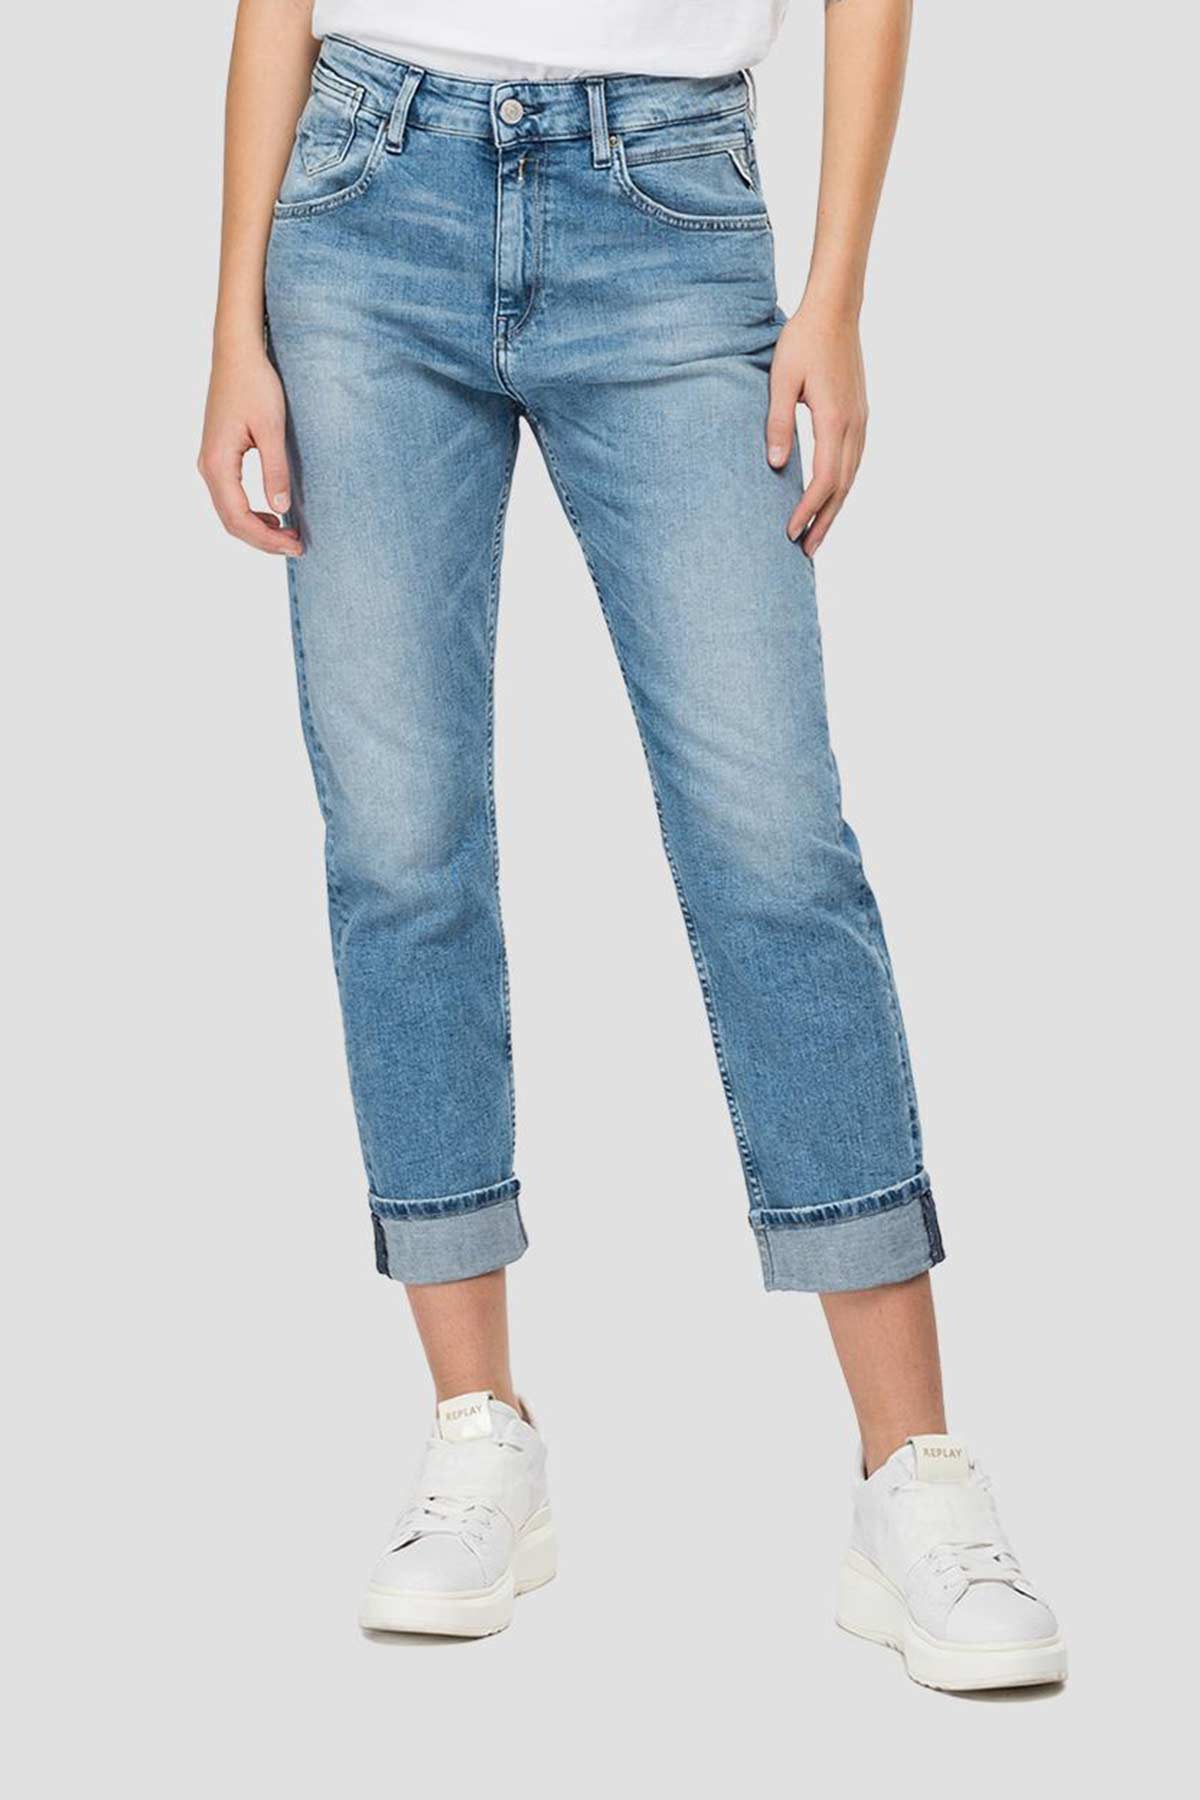 Replay Marty Slim Boyfriend Fit Biopack Organic Jeans-Libas Trendy Fashion Store